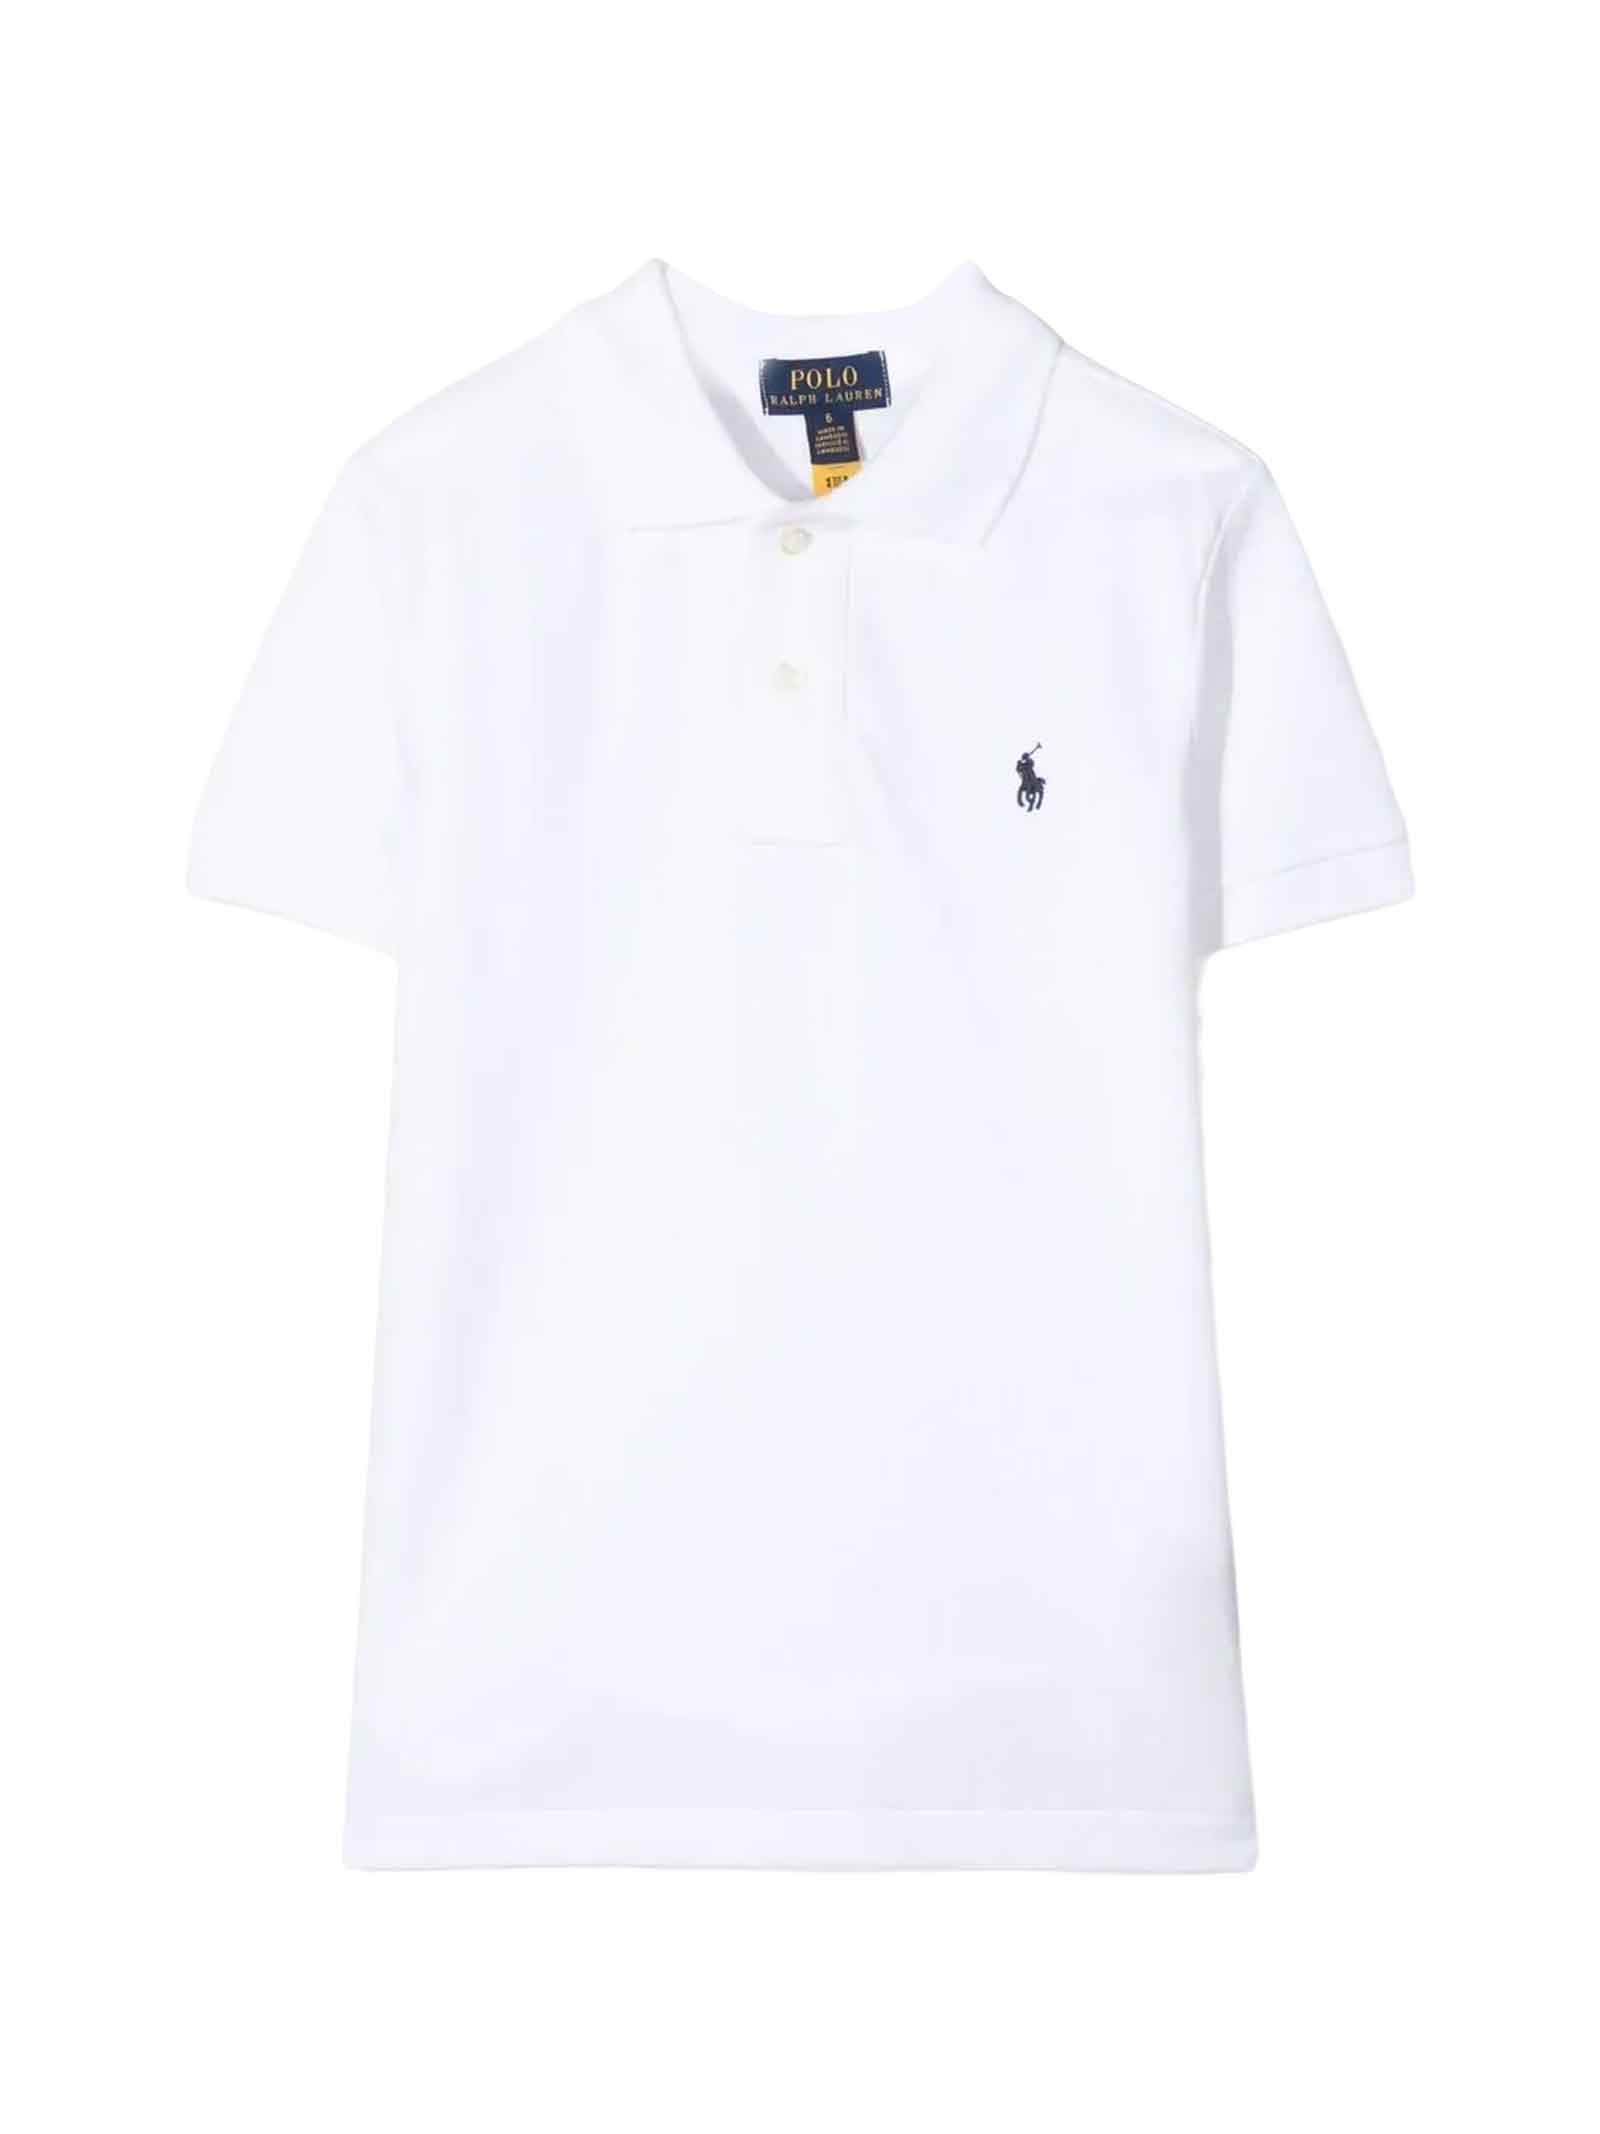 Ralph Lauren White Polo Shirt Boy